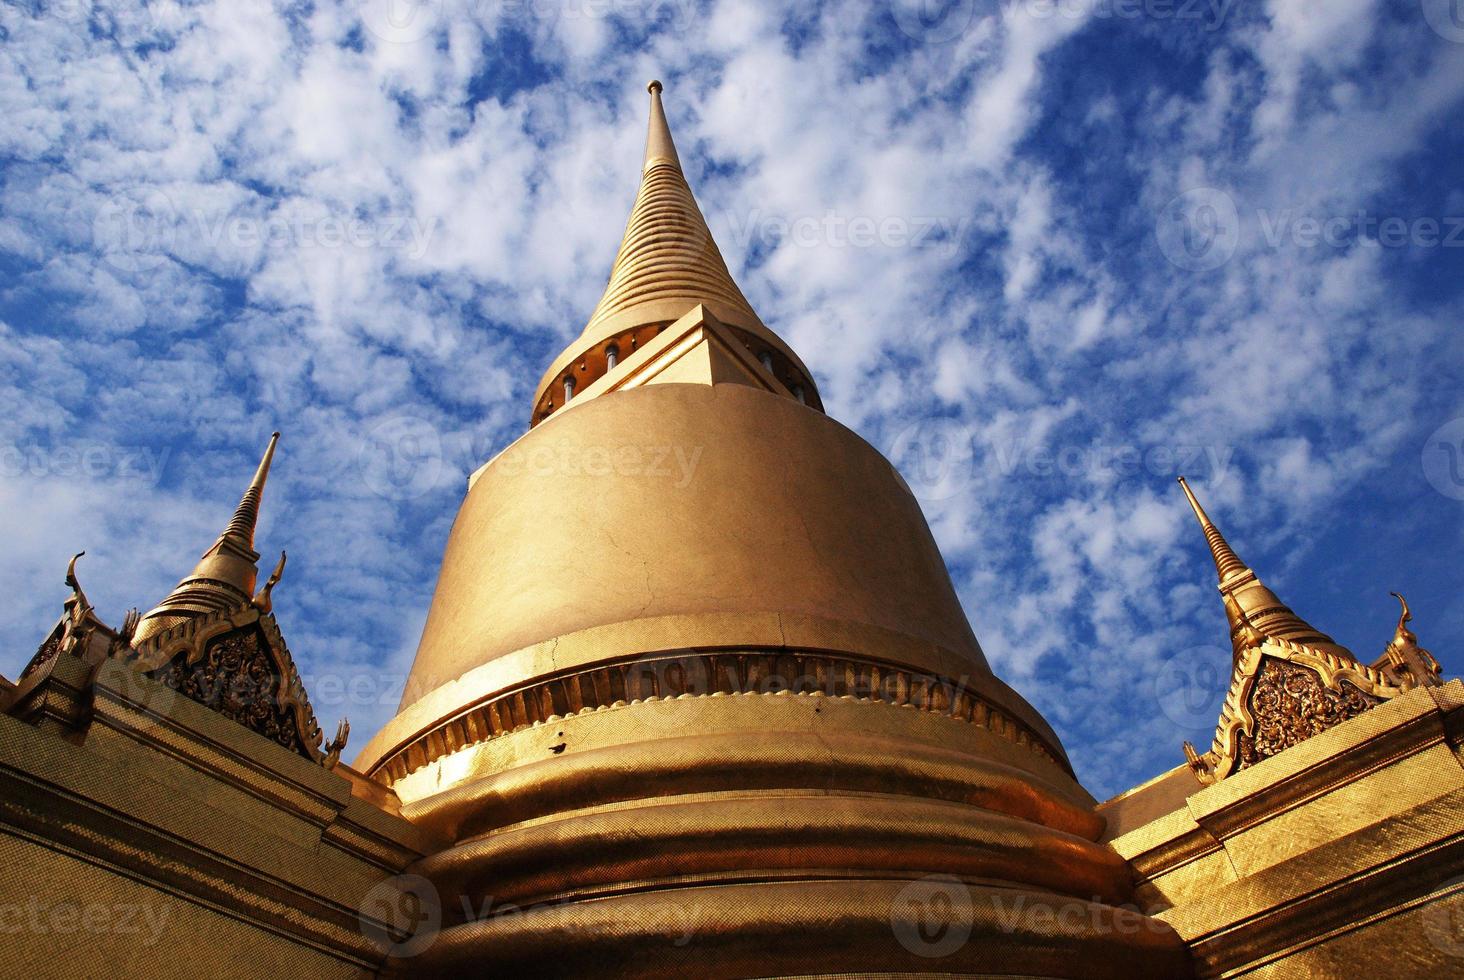 wat phra kaeo bangkok temple thailand photo